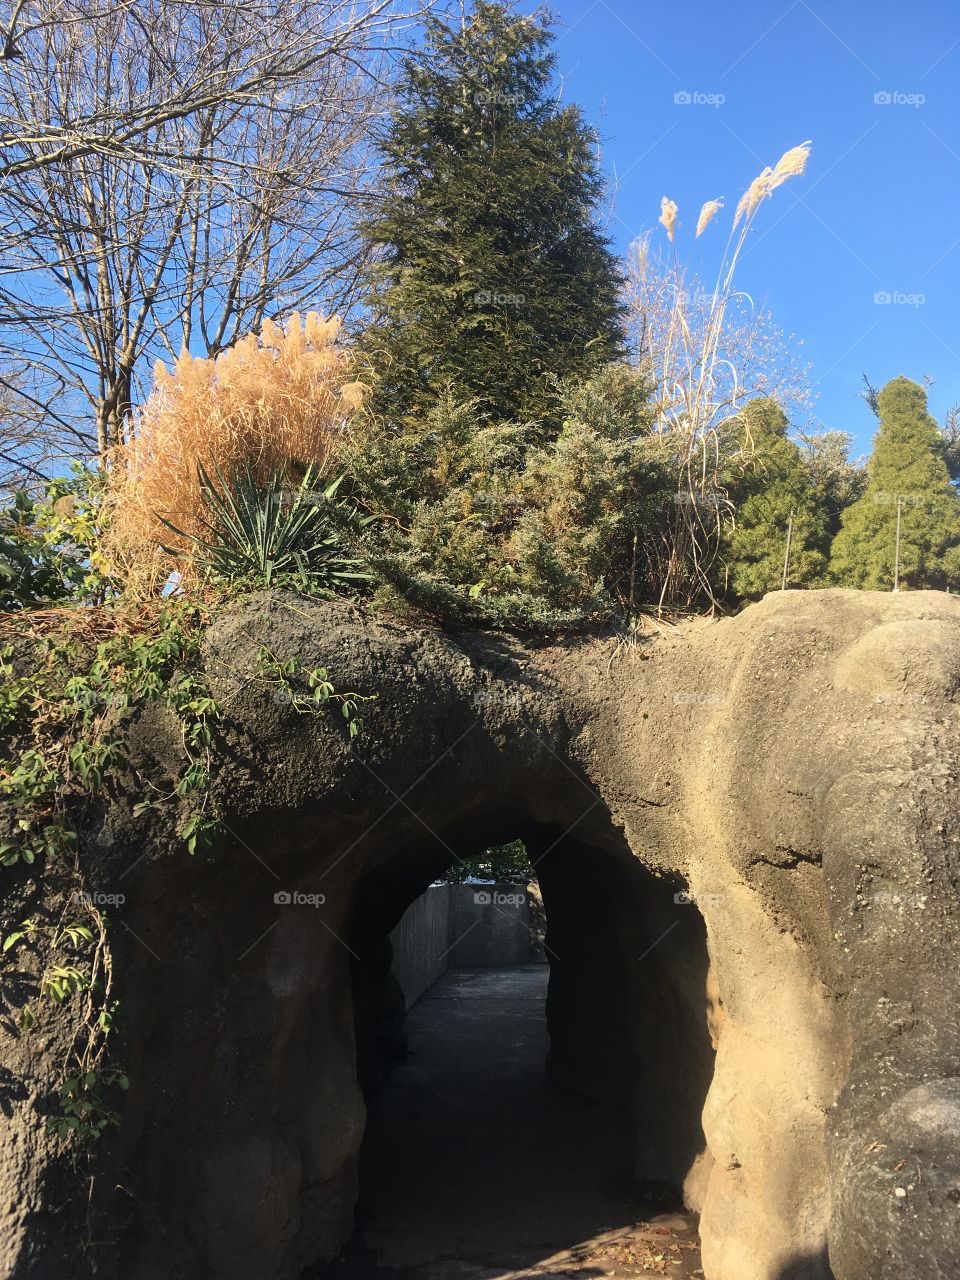 Entrance of cave in public garden